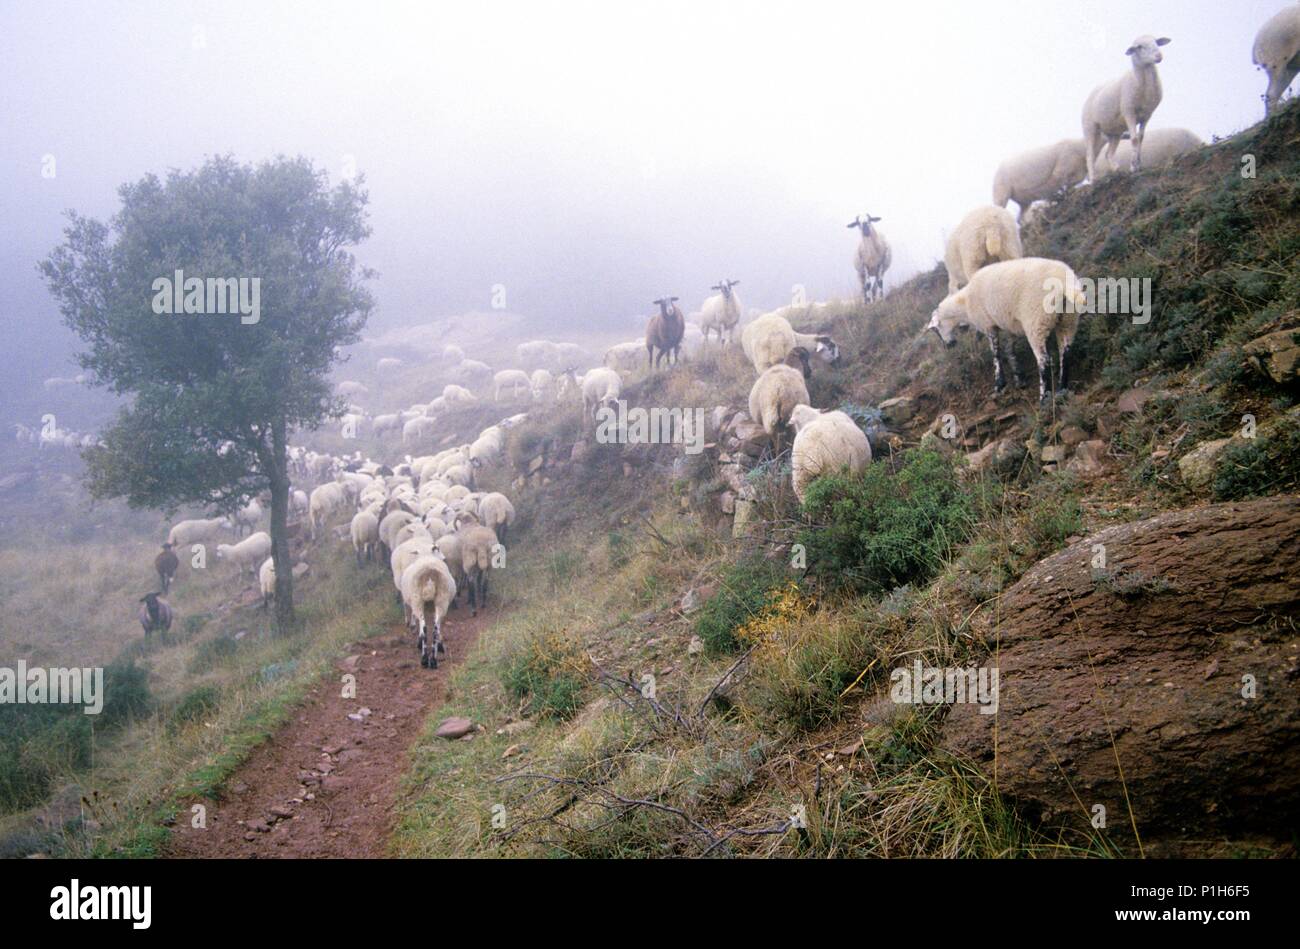 Montseny Natural Park; sheeps at the 'Pla de la Calma' zone. Stock Photo